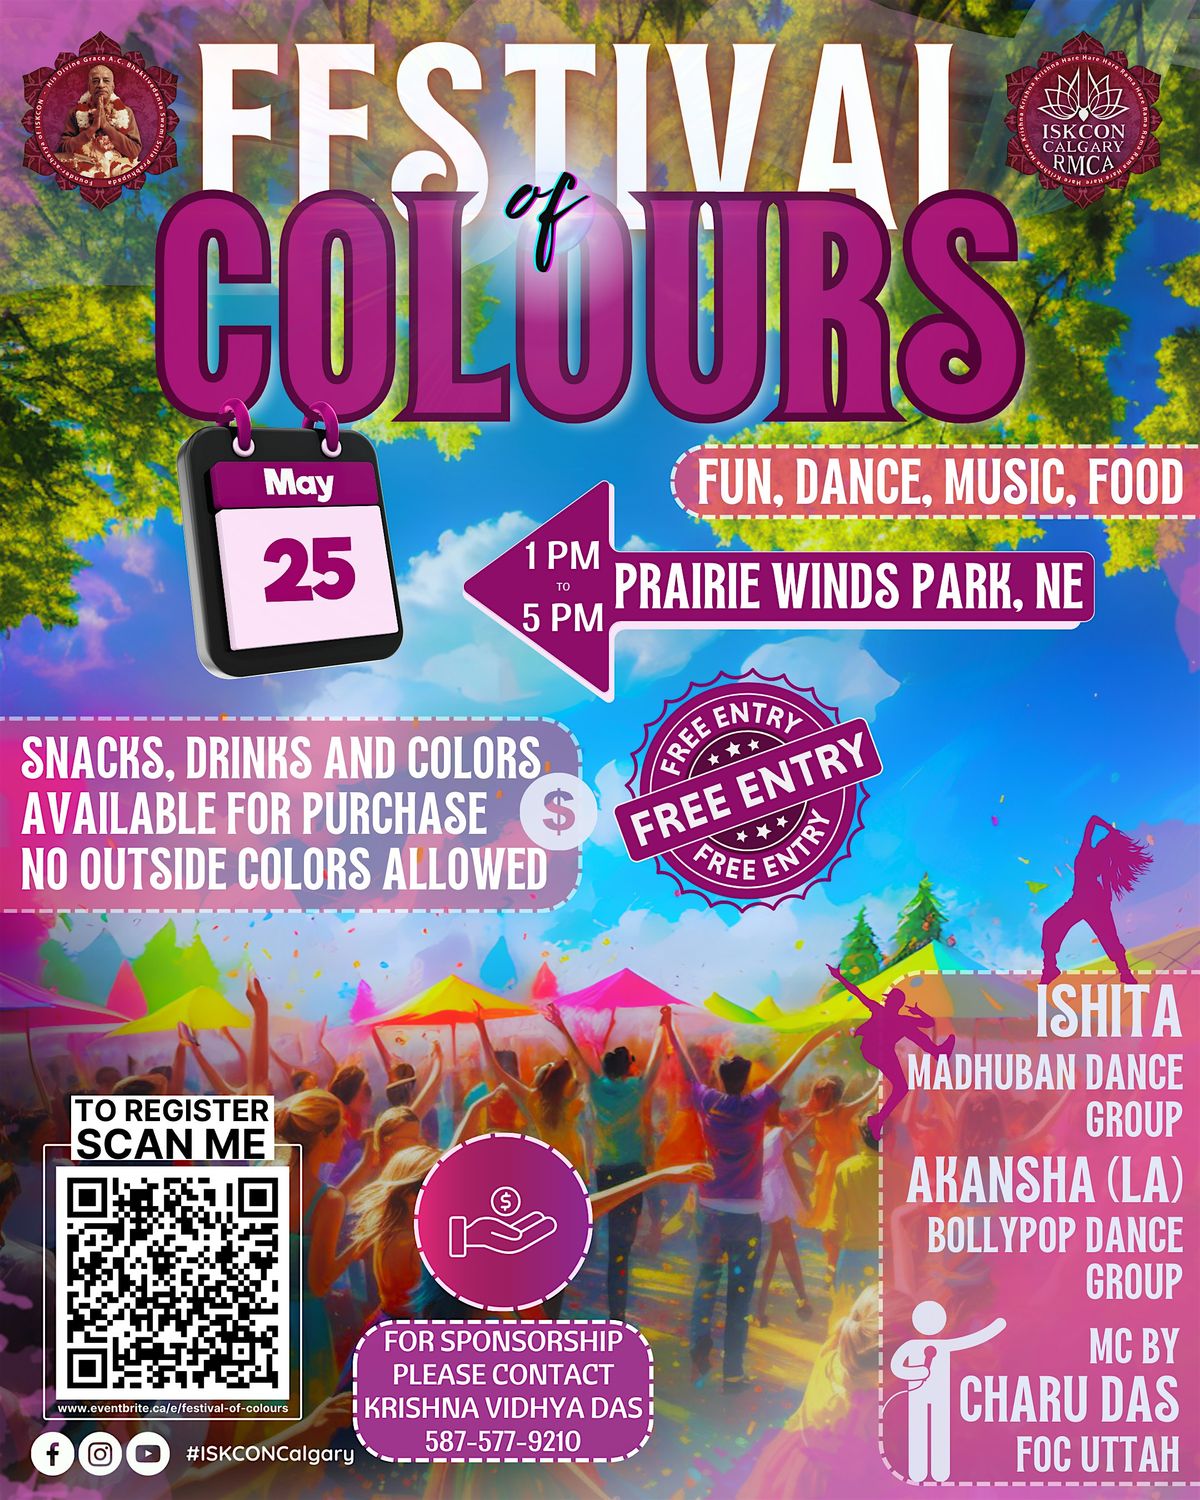 Festival of Colours